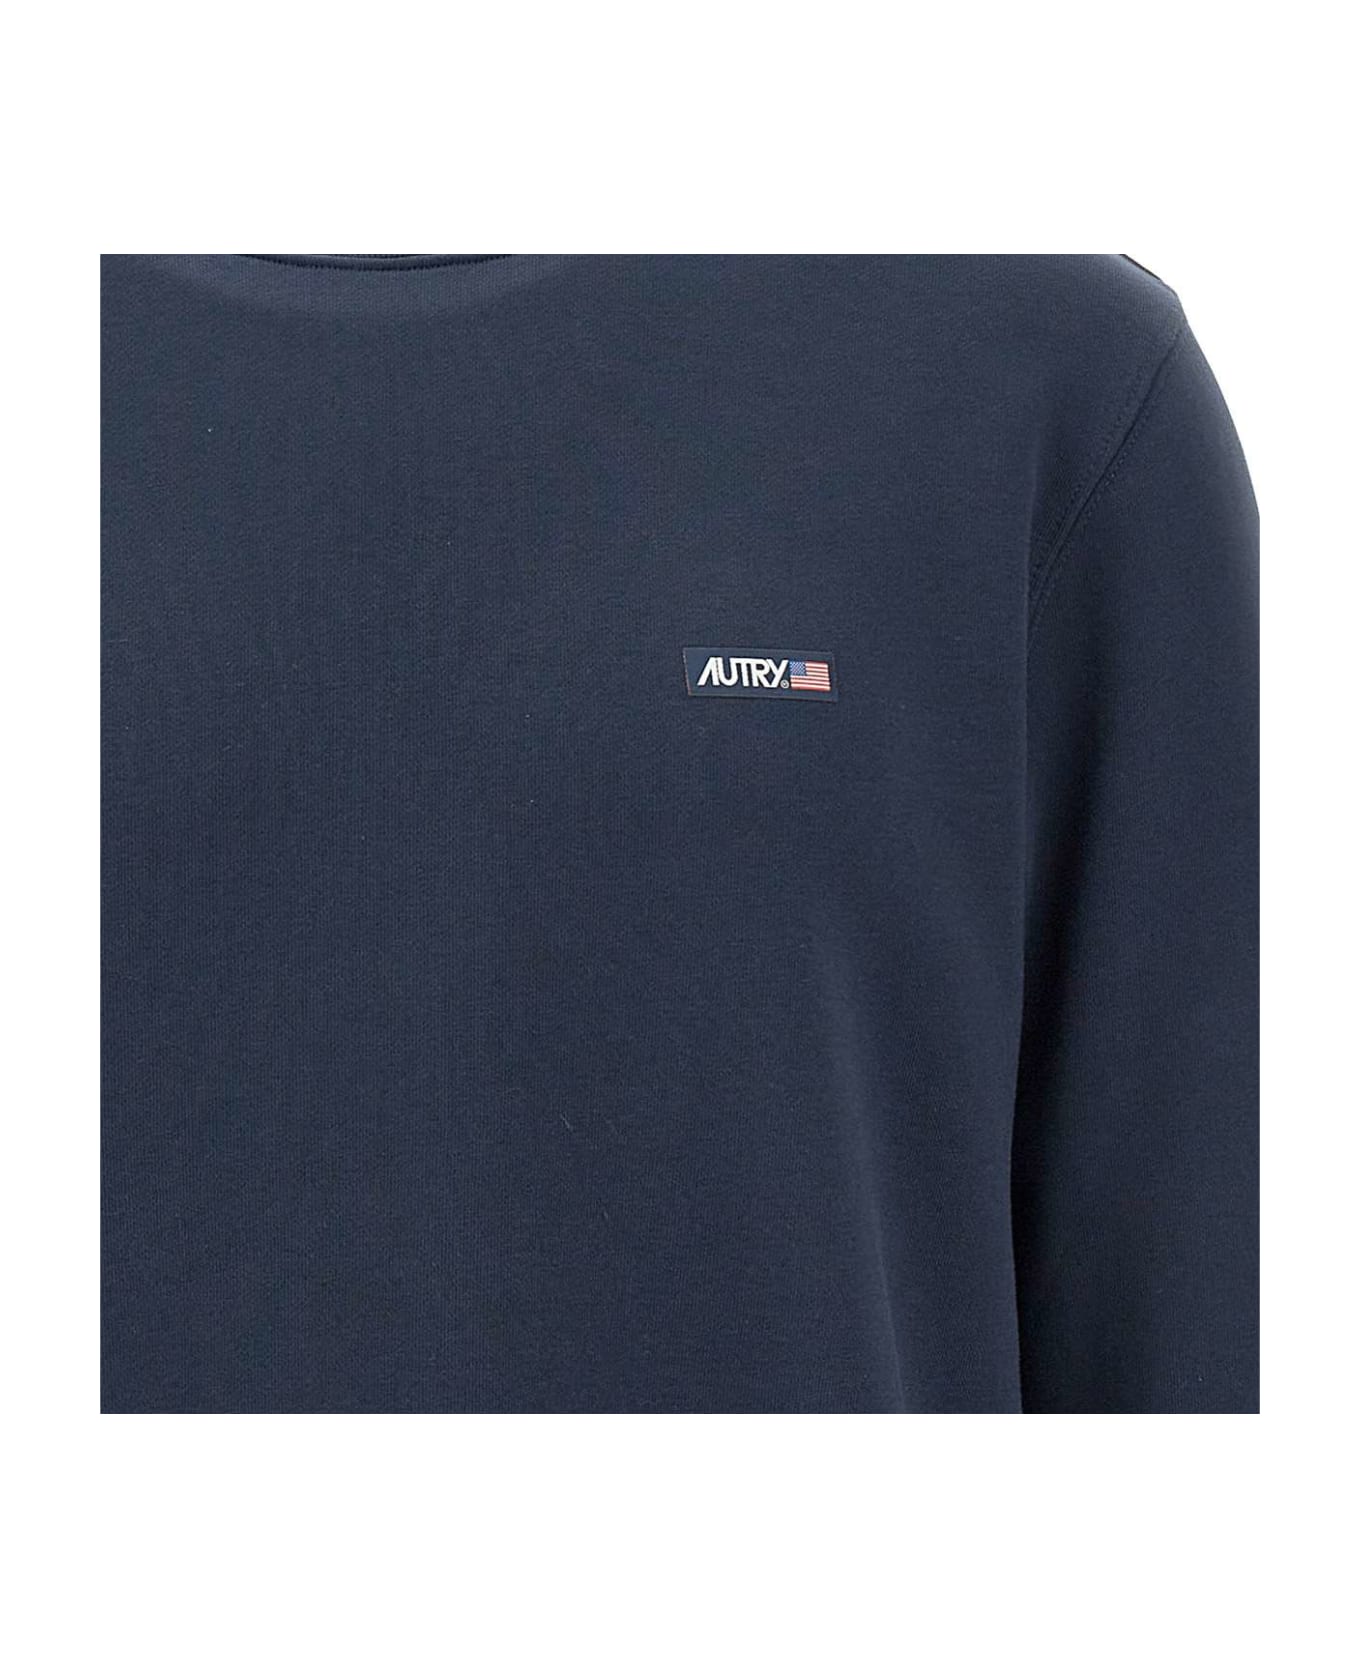 Autry "main Man Apparel" Cotton Sweatshirt - BLUE